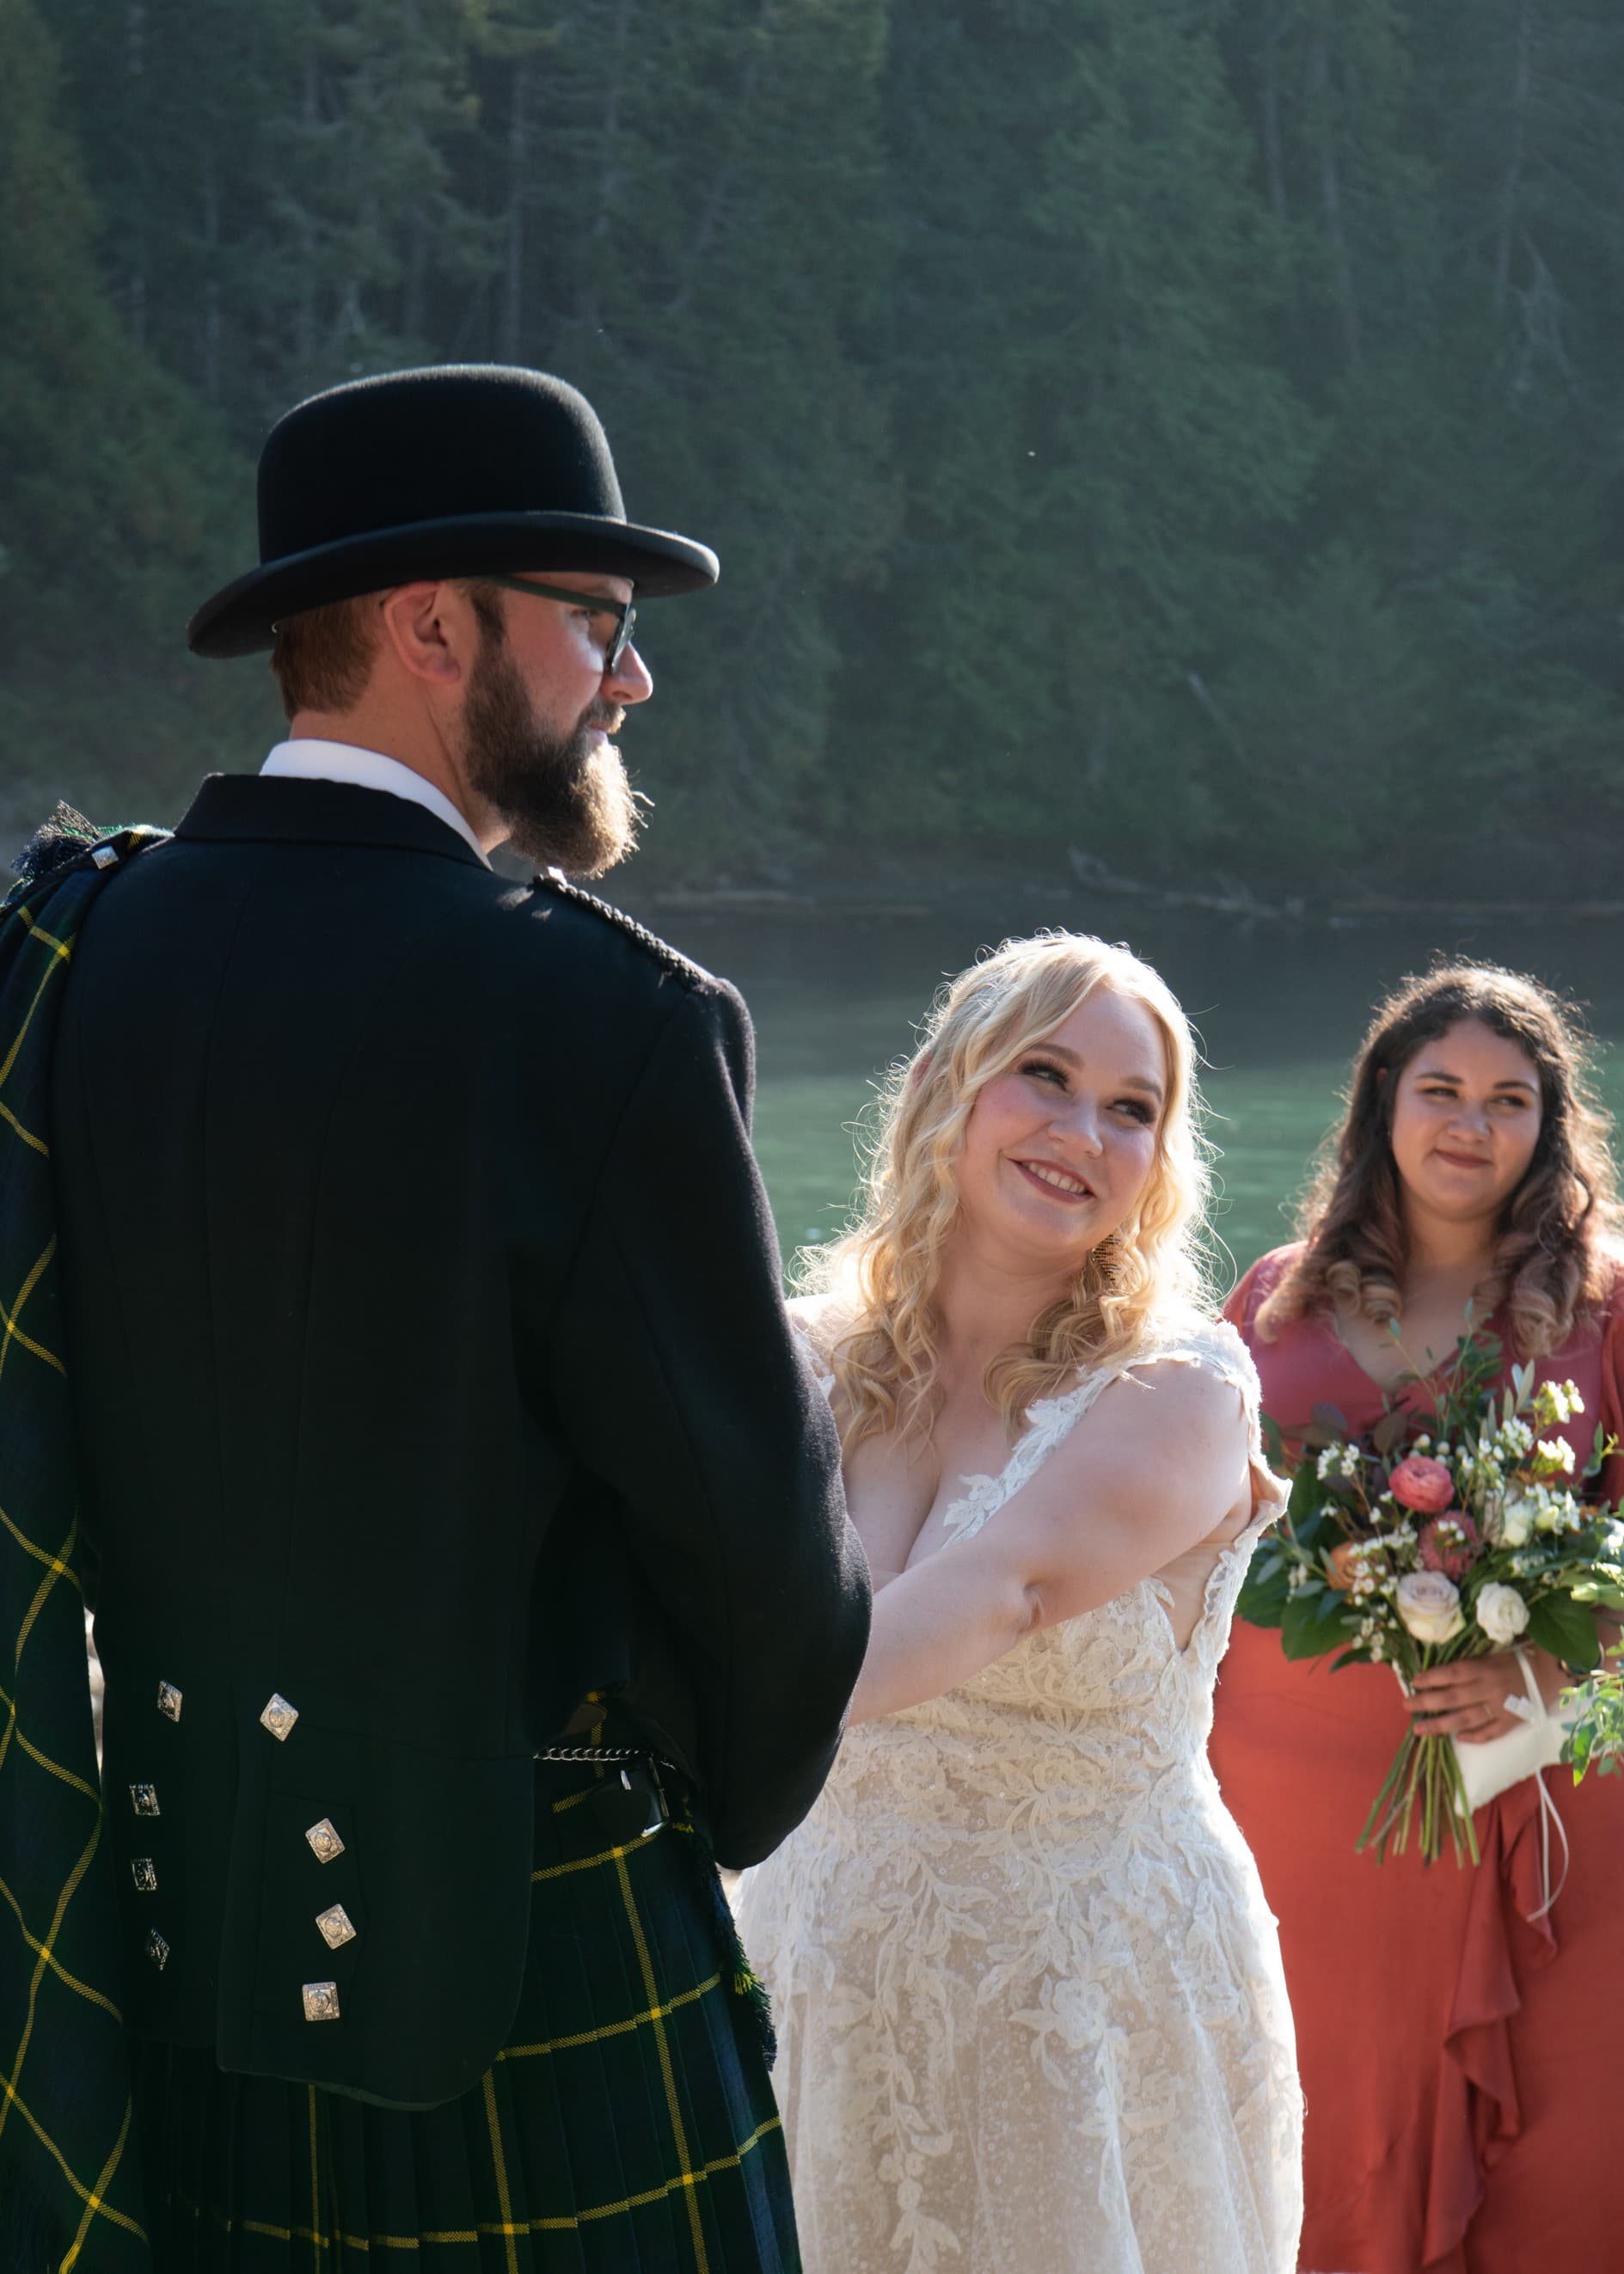 TALI & CALEB 'S WEDDING | ROE islet, PENDER ISLAND, BC